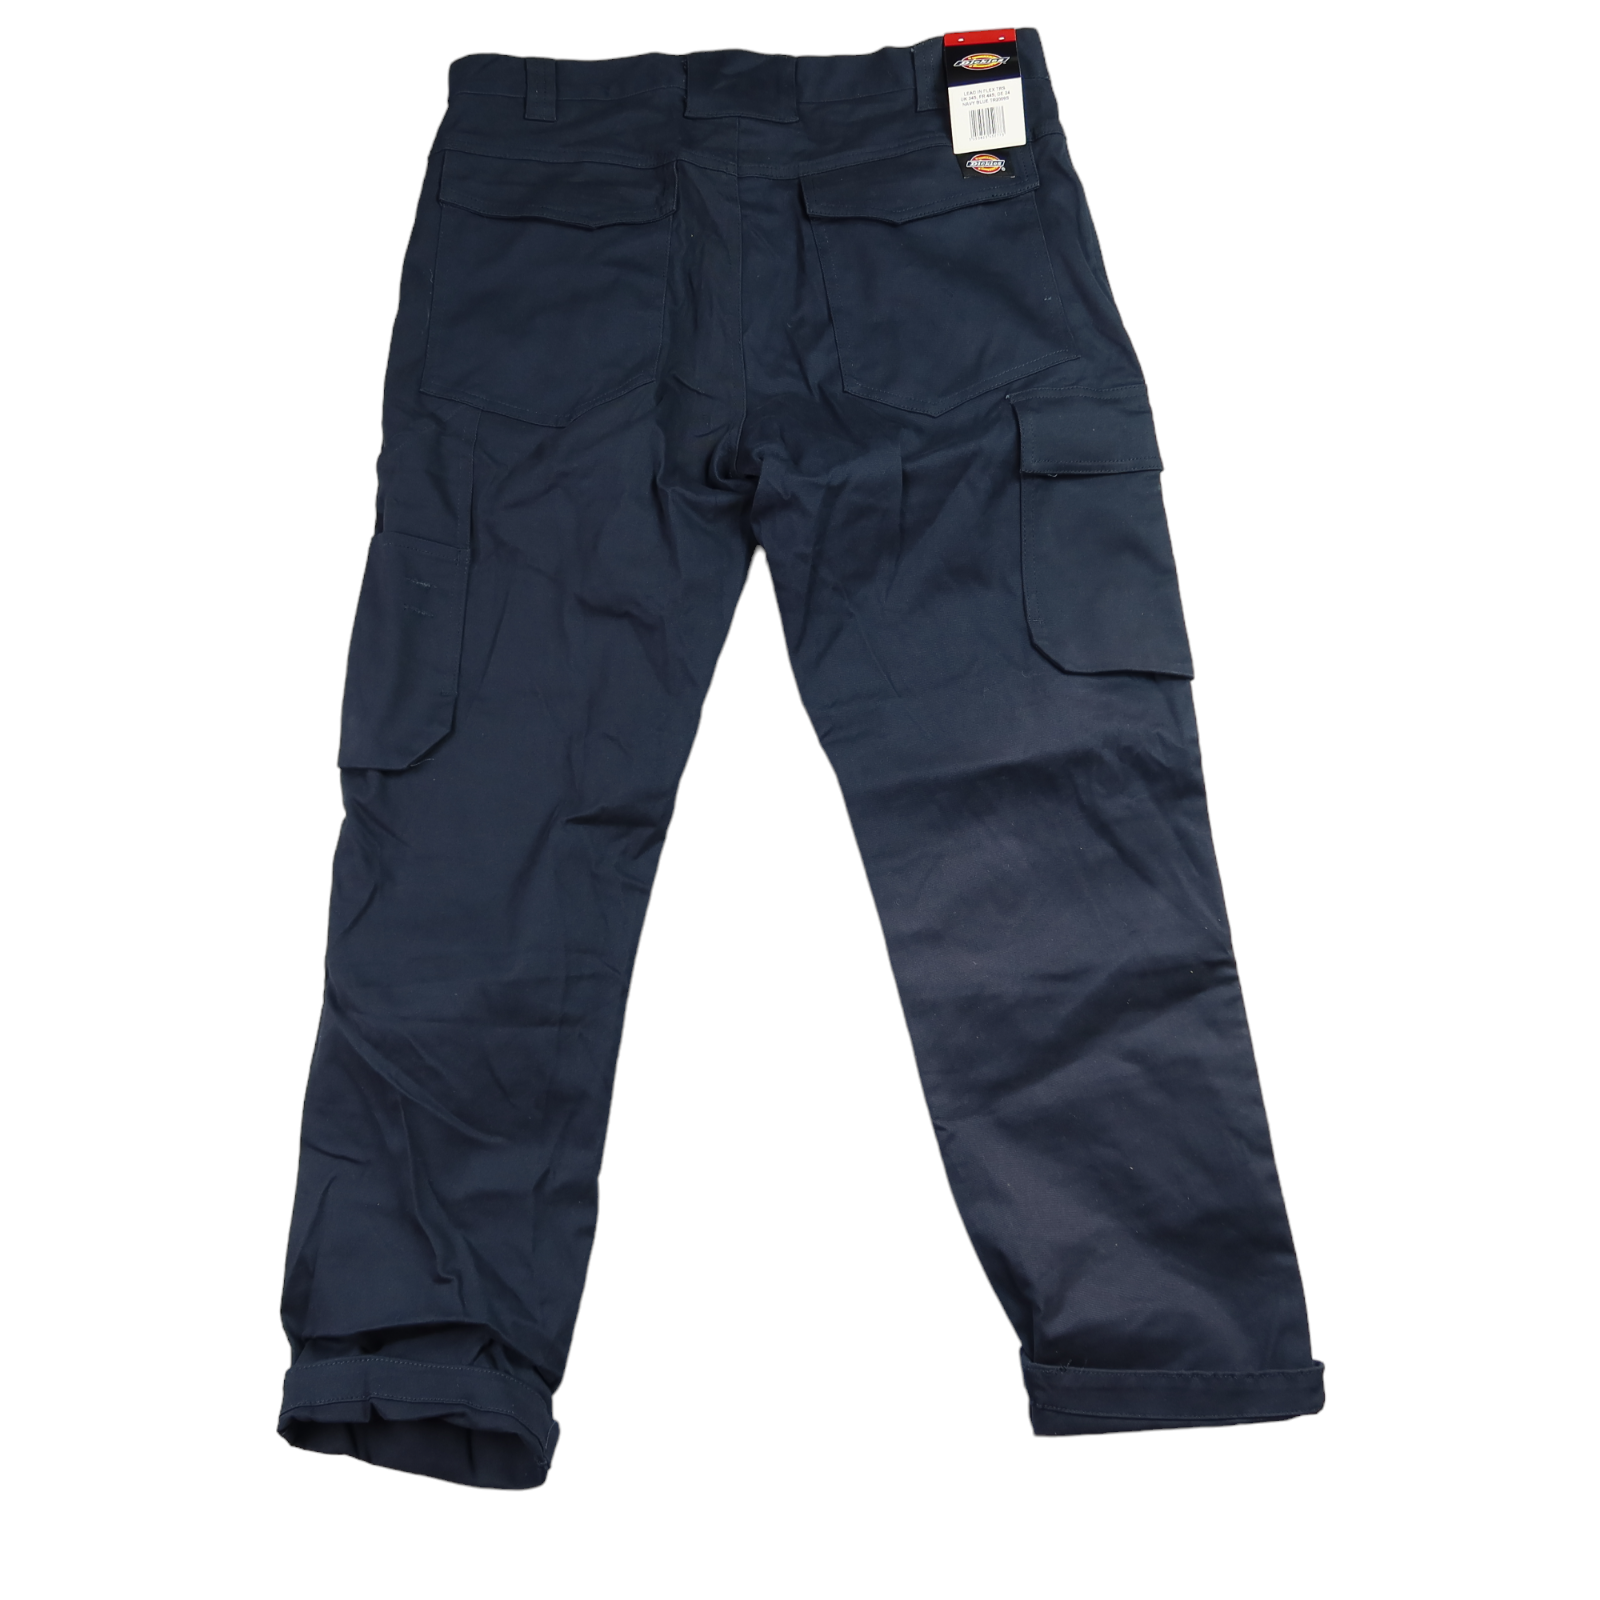 Dickies Men's Lead in Flex Pants Trousers, Navy Blue. 34S | eBay